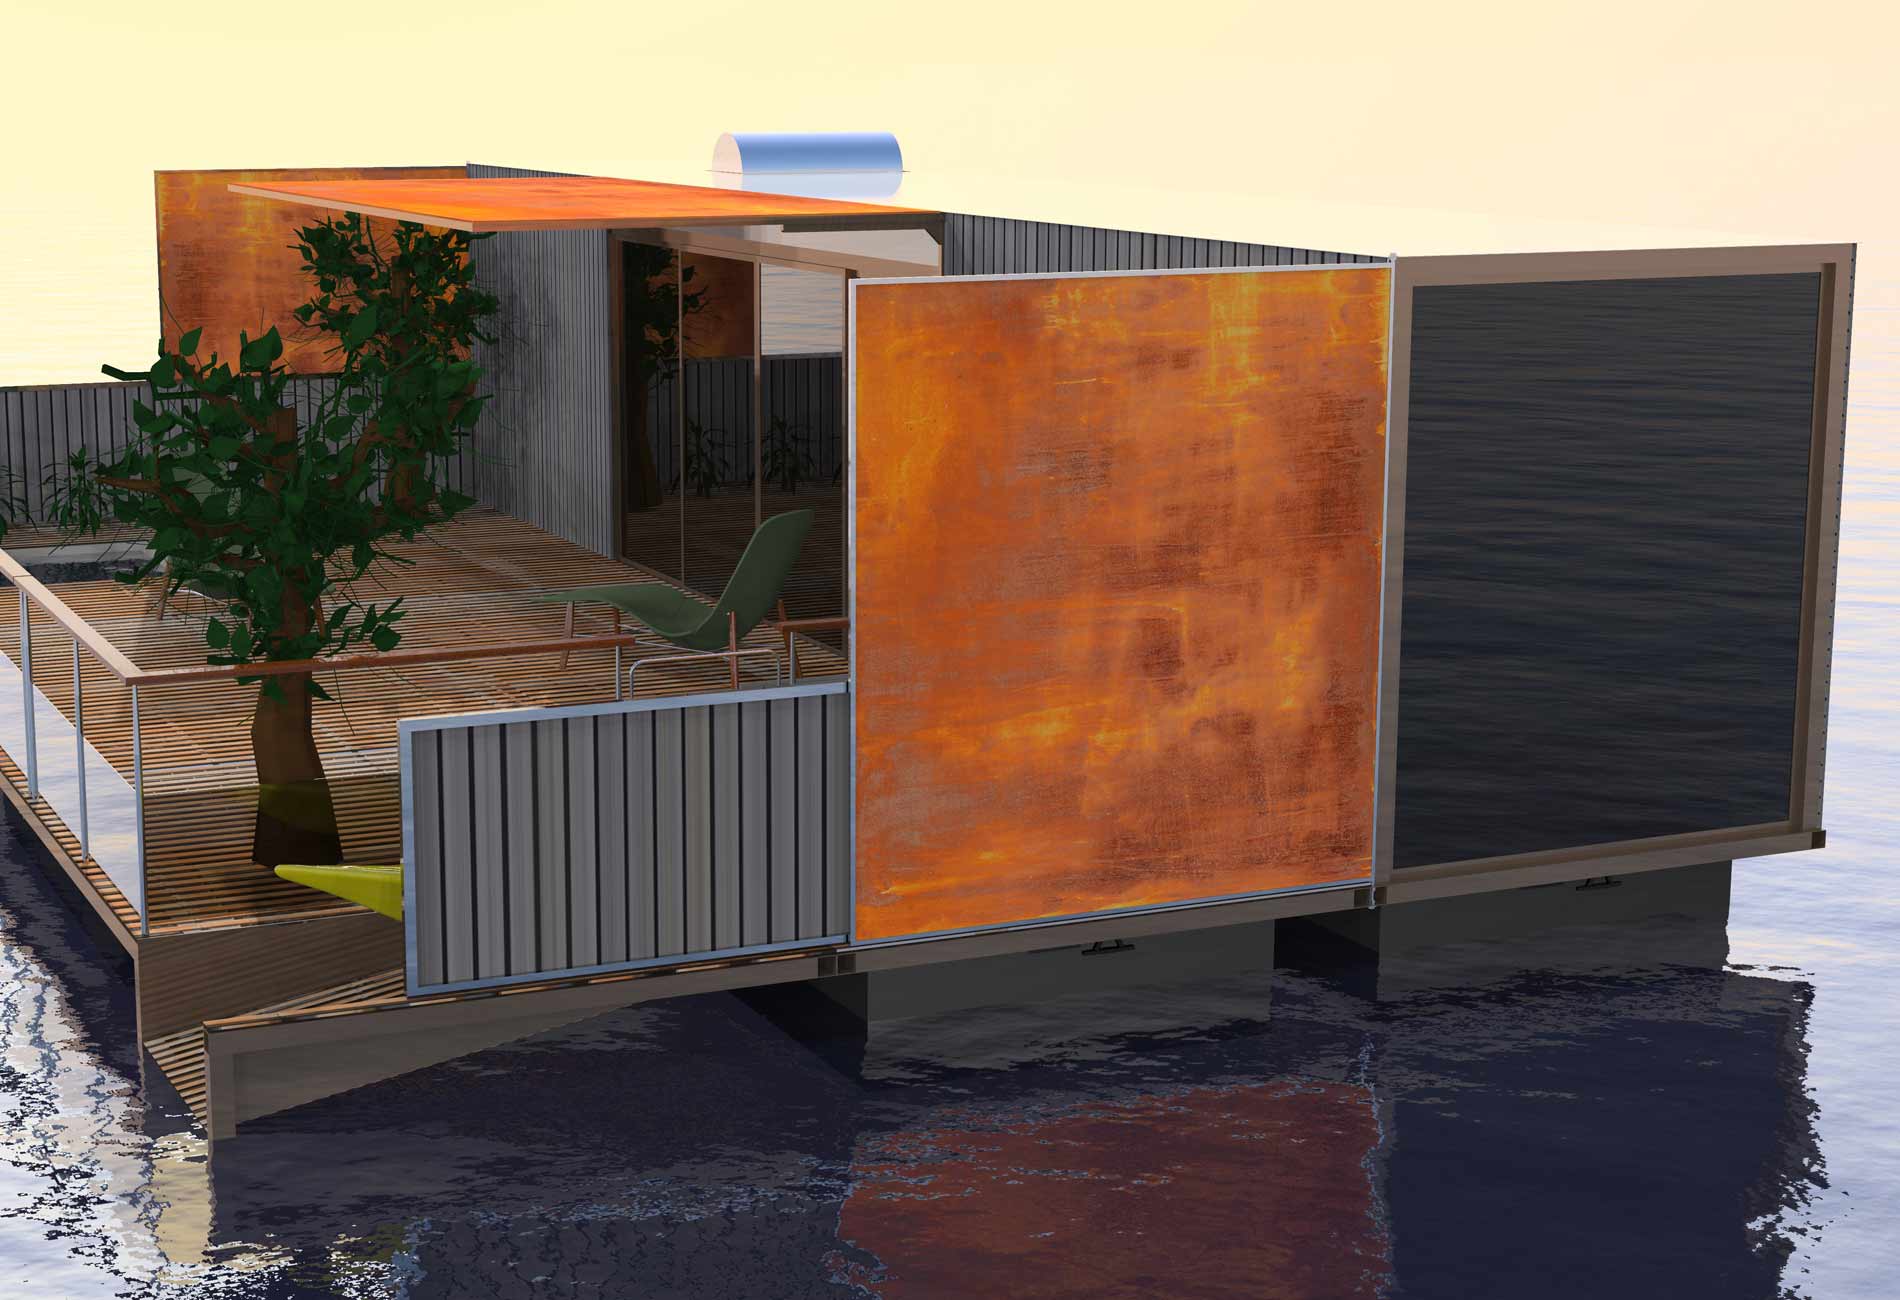 HouseBoat-Architecte-Vincent-Lebailly-Format-container-Habitation-flottante-Innovation